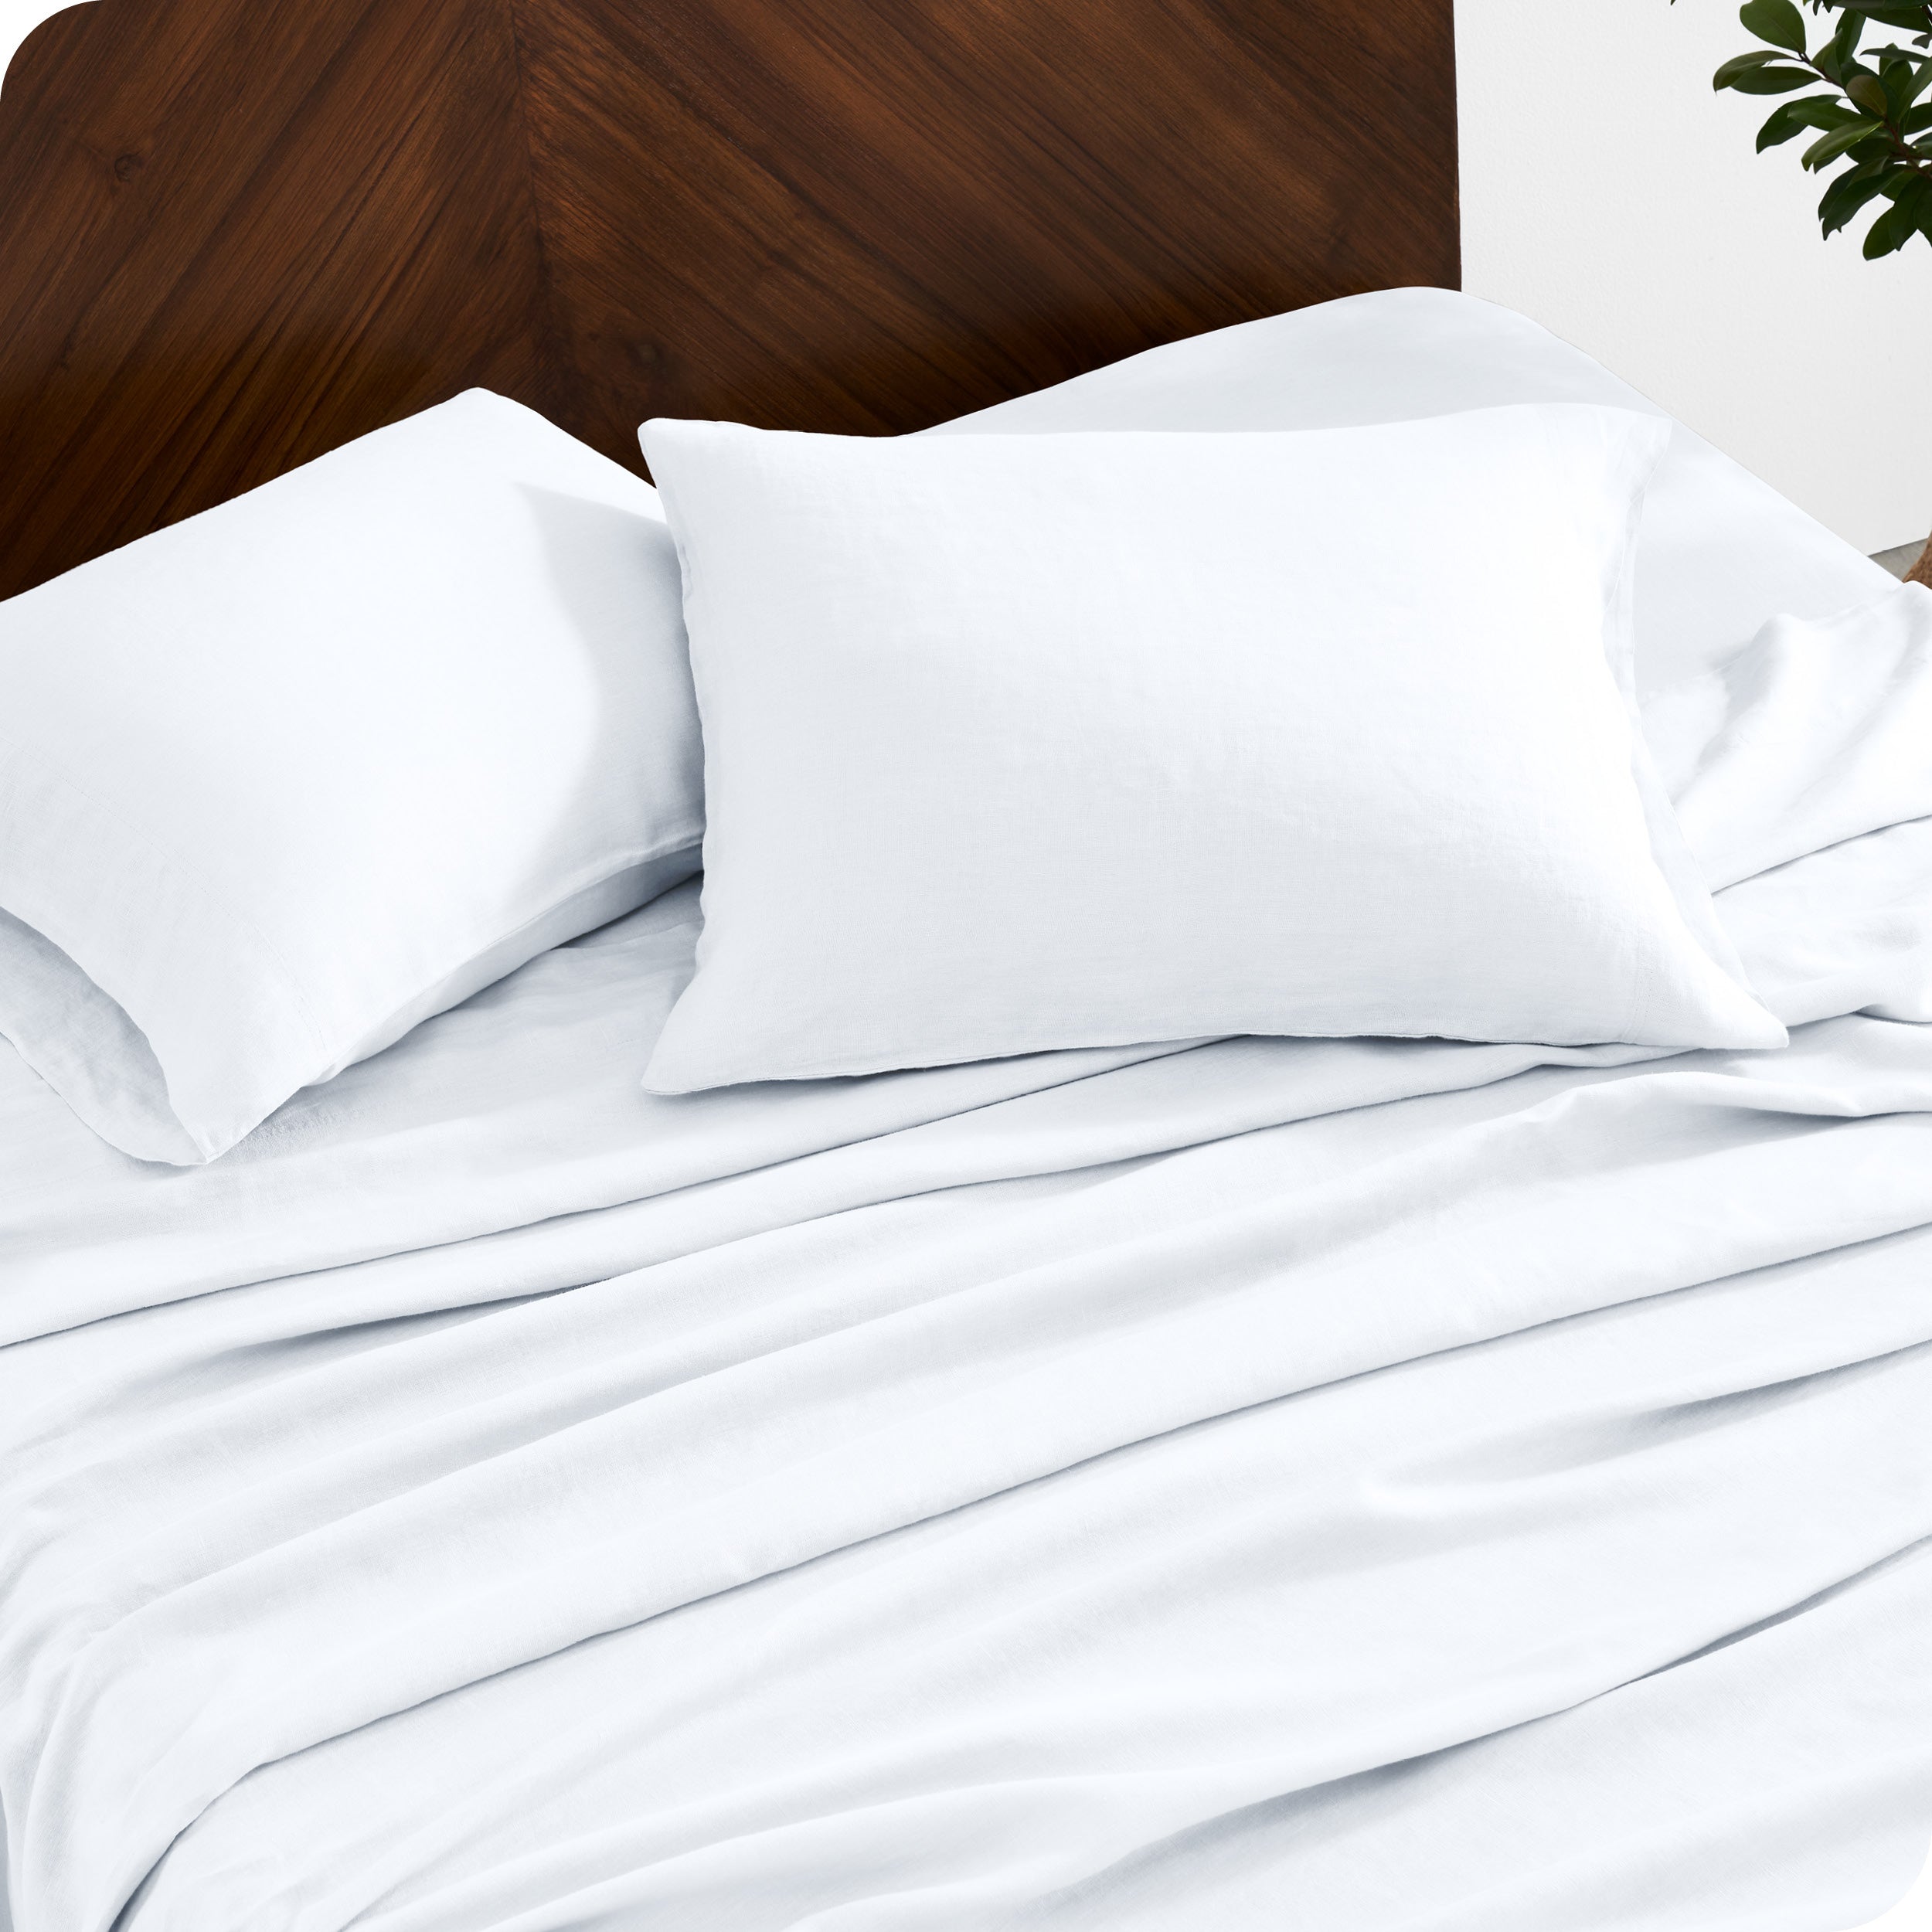 Close up of linen sheet set on a mattress with pillows inside the pillowcases